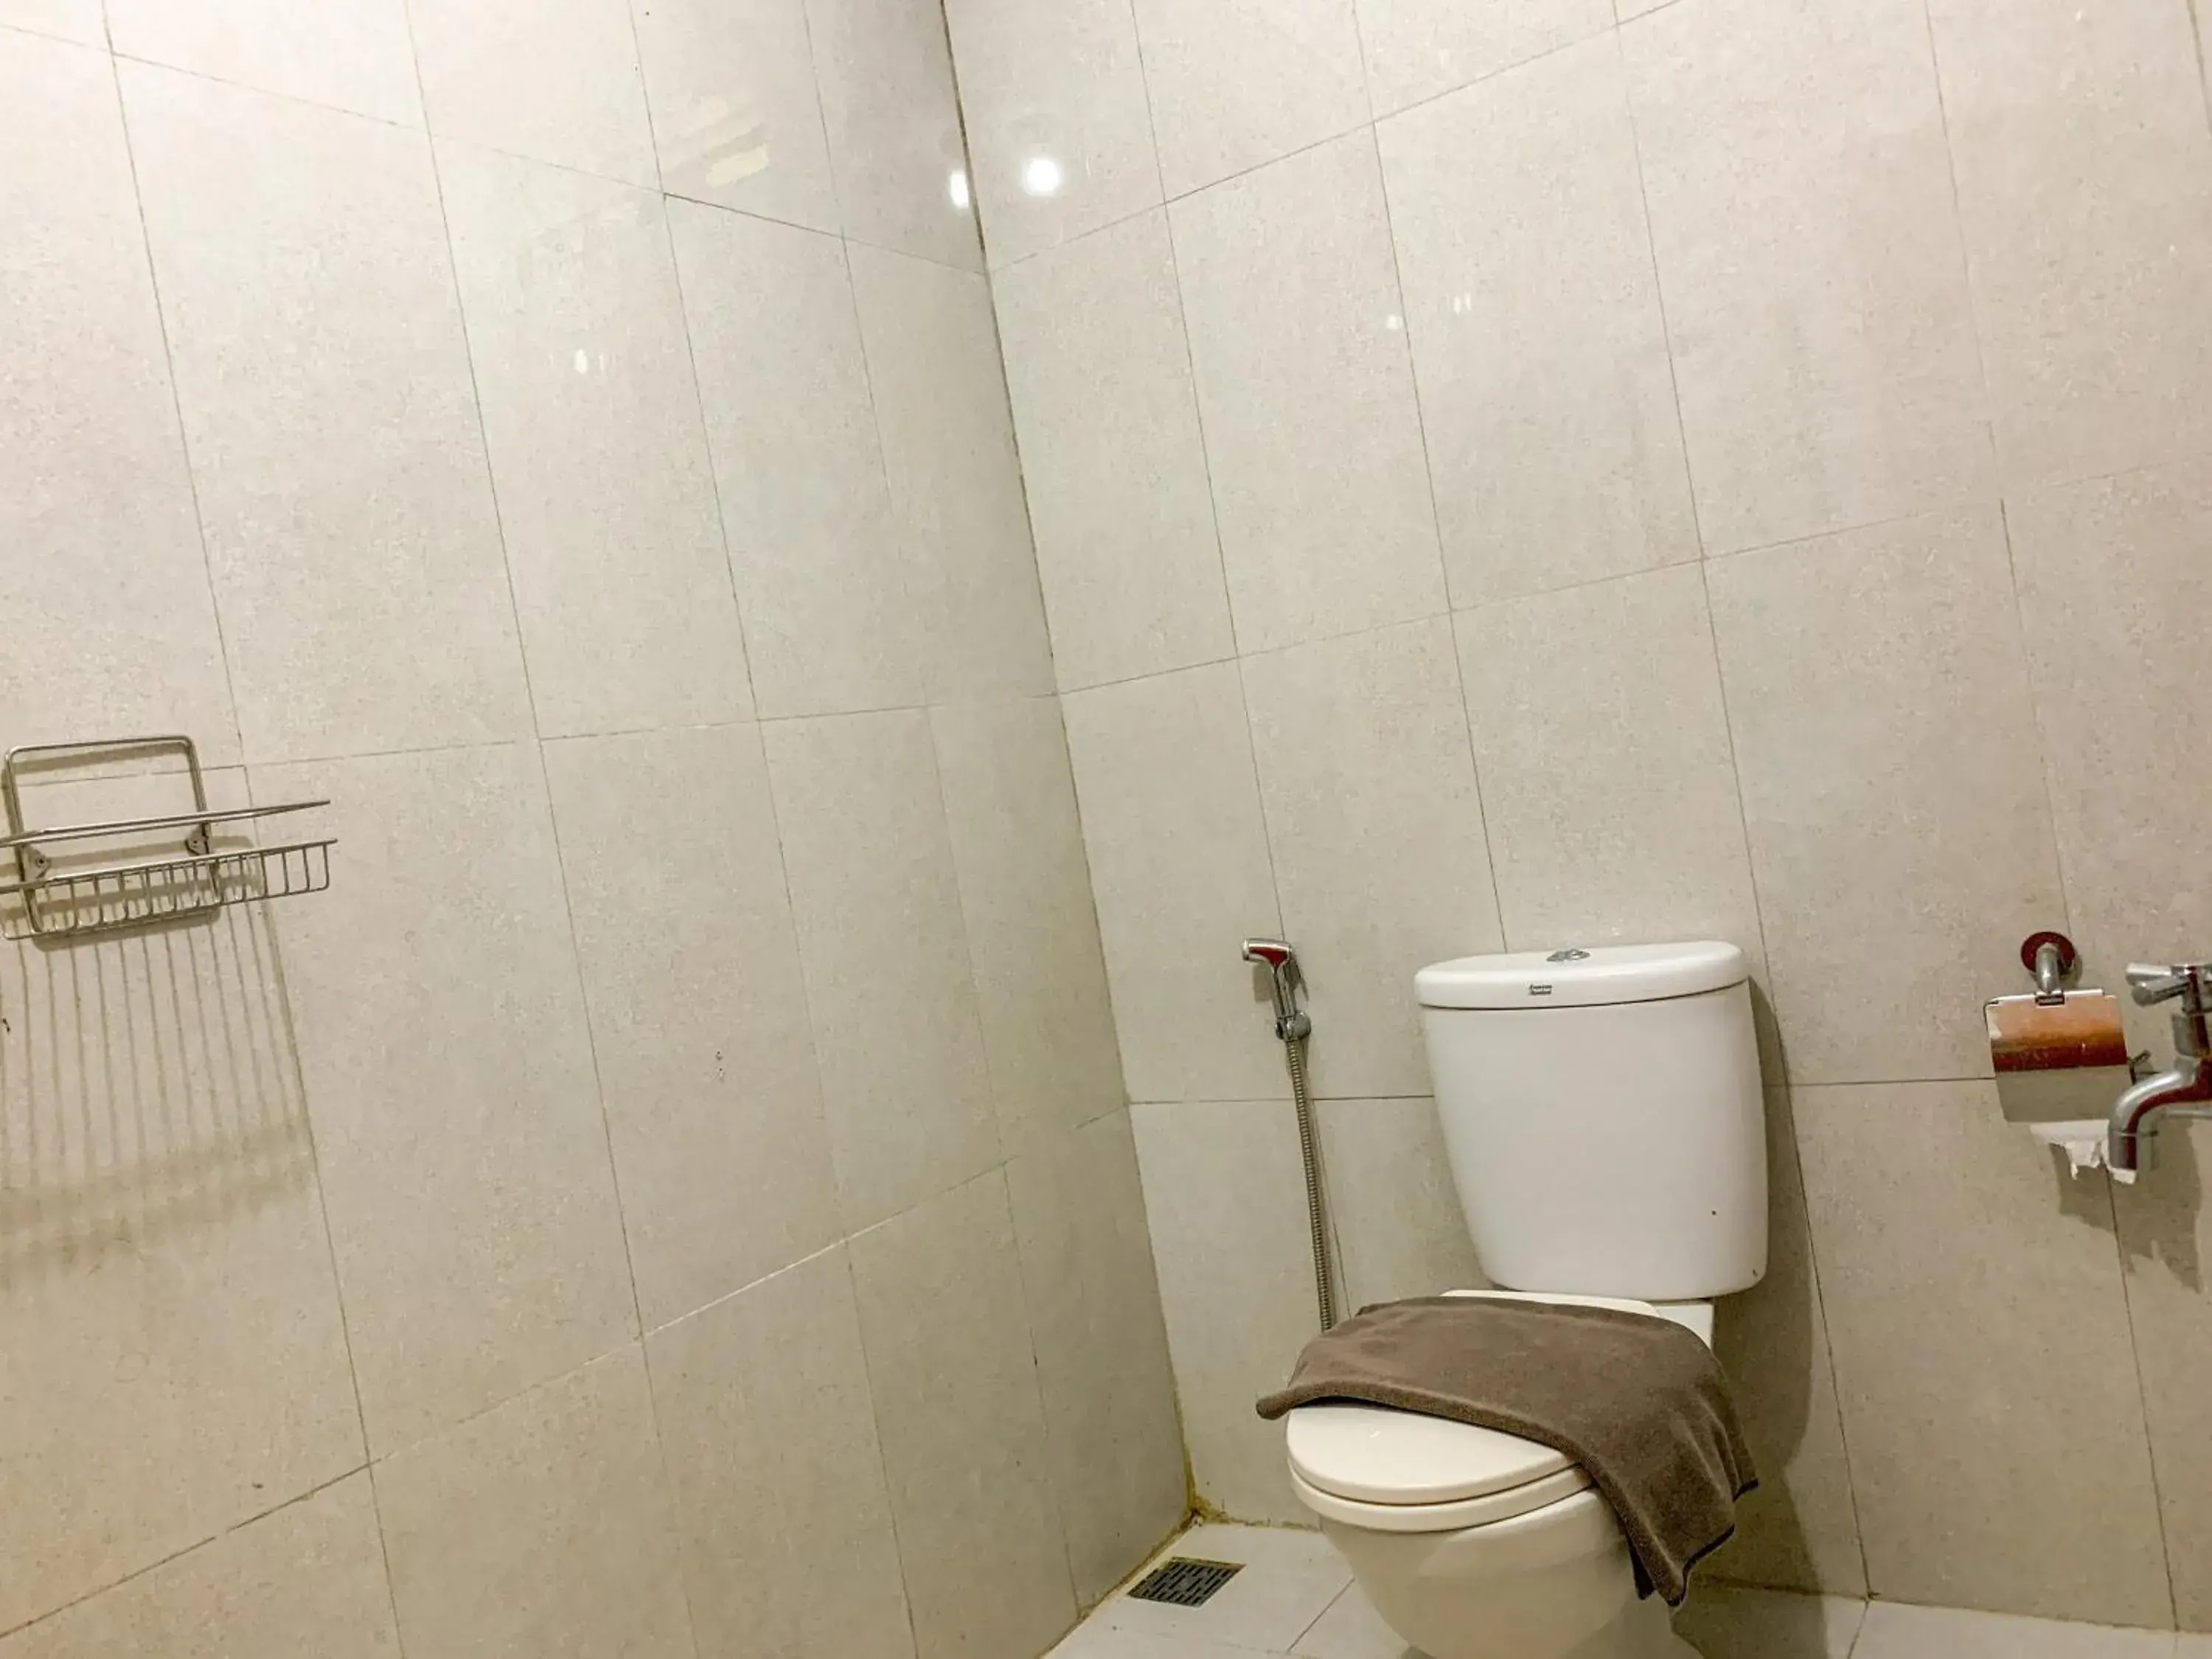 Toilet, Bathroom in Urbanview Sasono Putro Condoongcatur